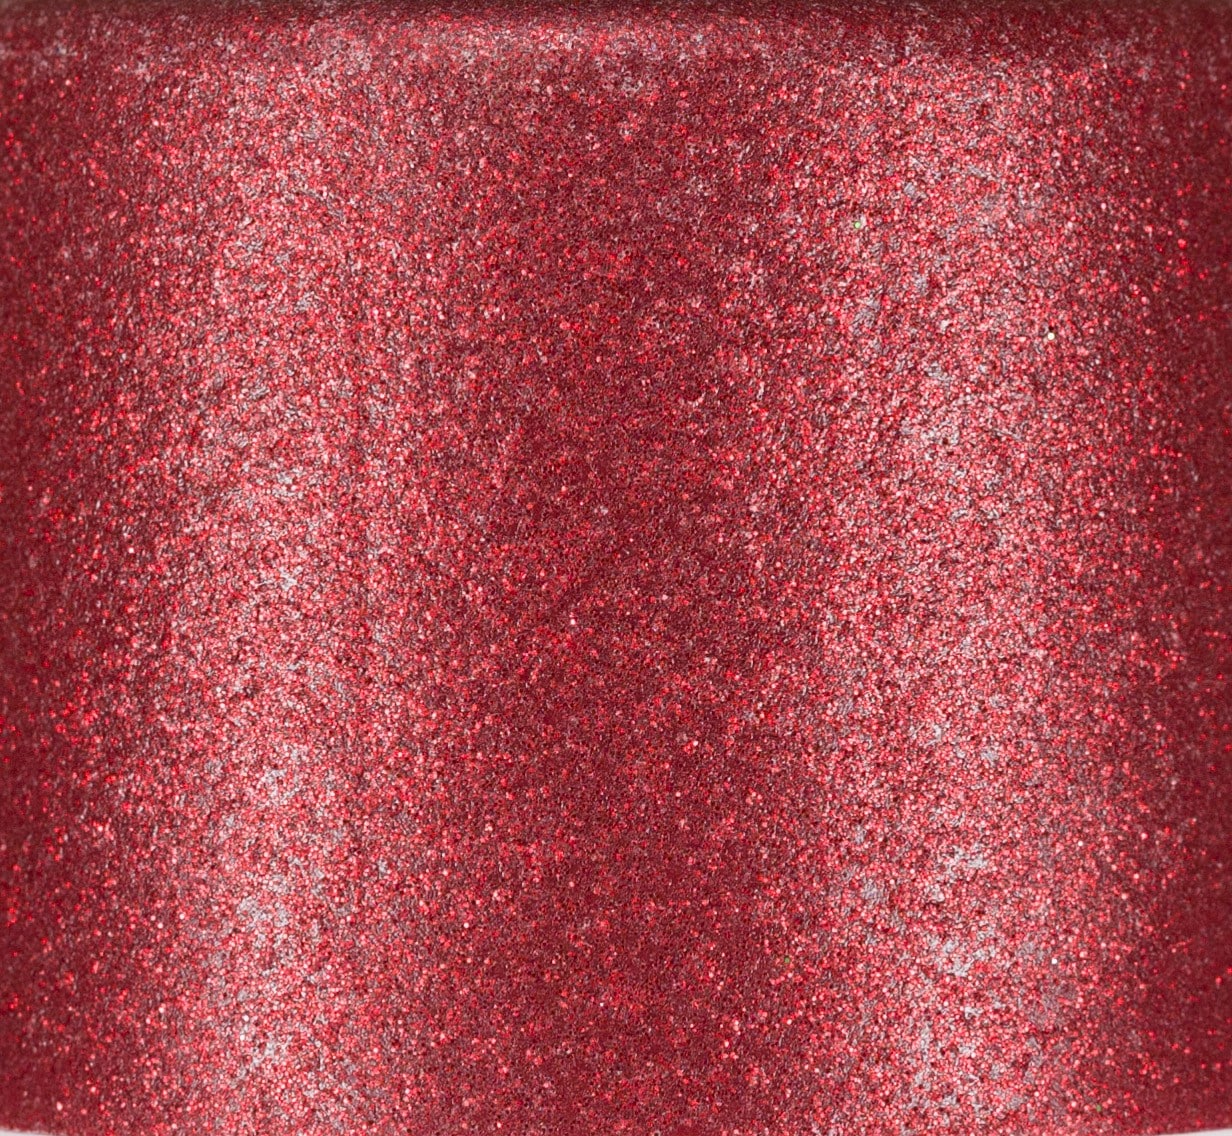 Rust-Oleum Satin Red Glitter Spray Paint (NET WT. 11-oz) at